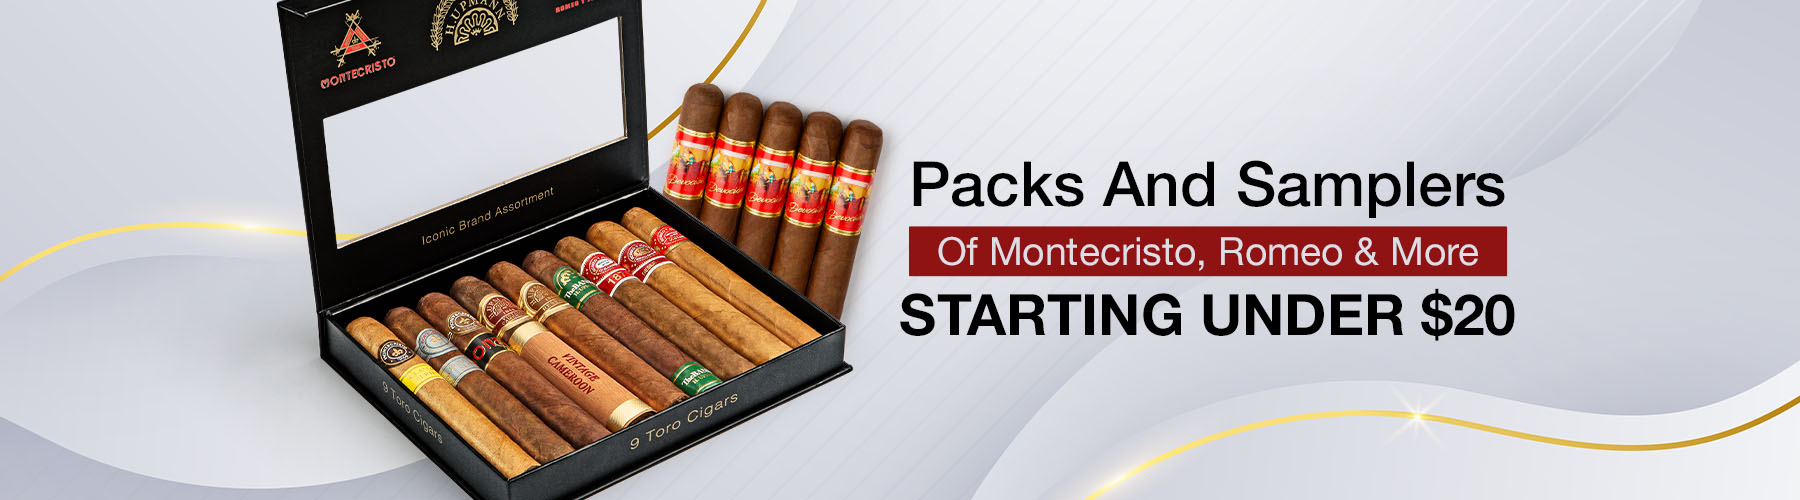 Packs and Samplers of Montecristo, Romeo & More Starting under $20!